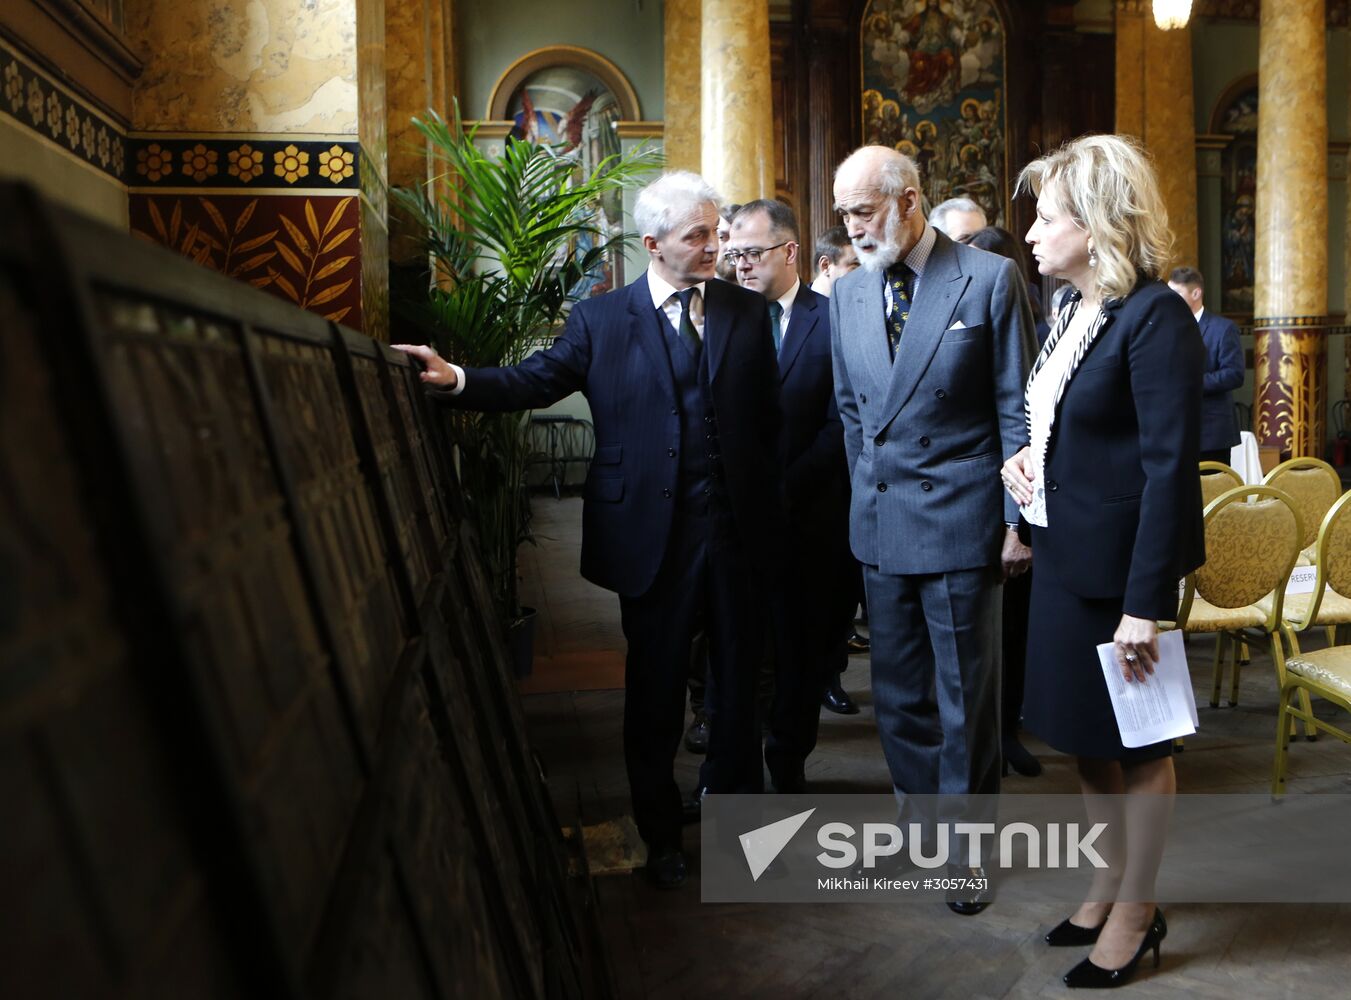 Prince Michael of Kent visits St. Petersburg